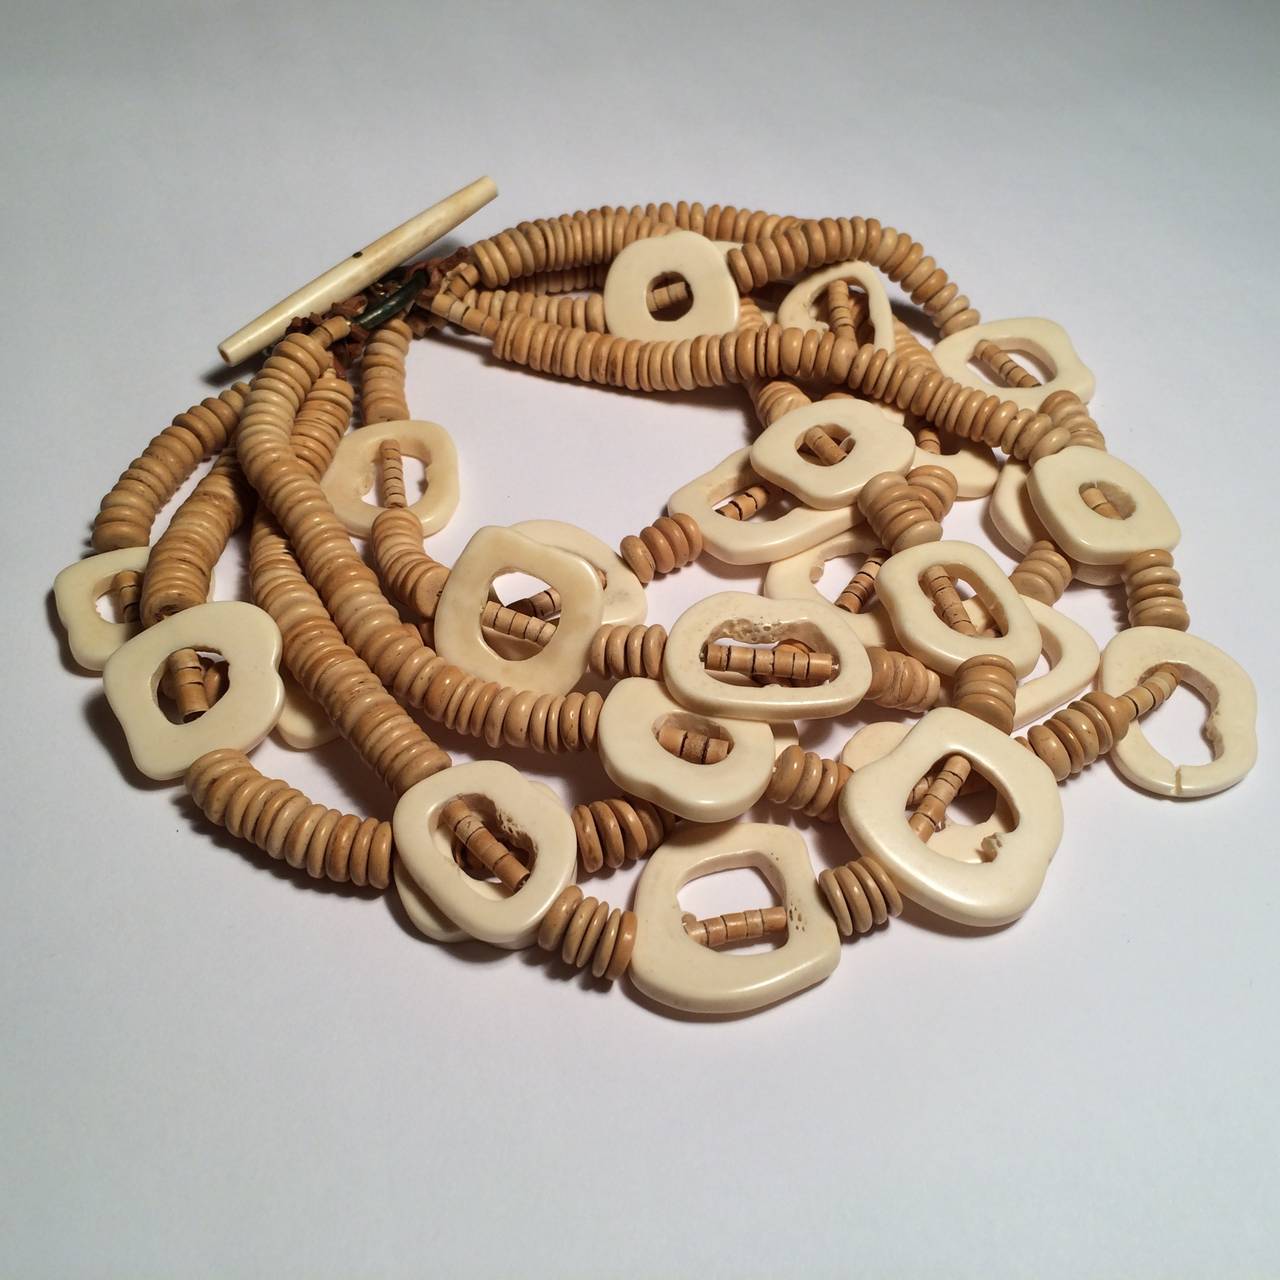 Decorative tribal necklace made of bone, Africa, 21st century.